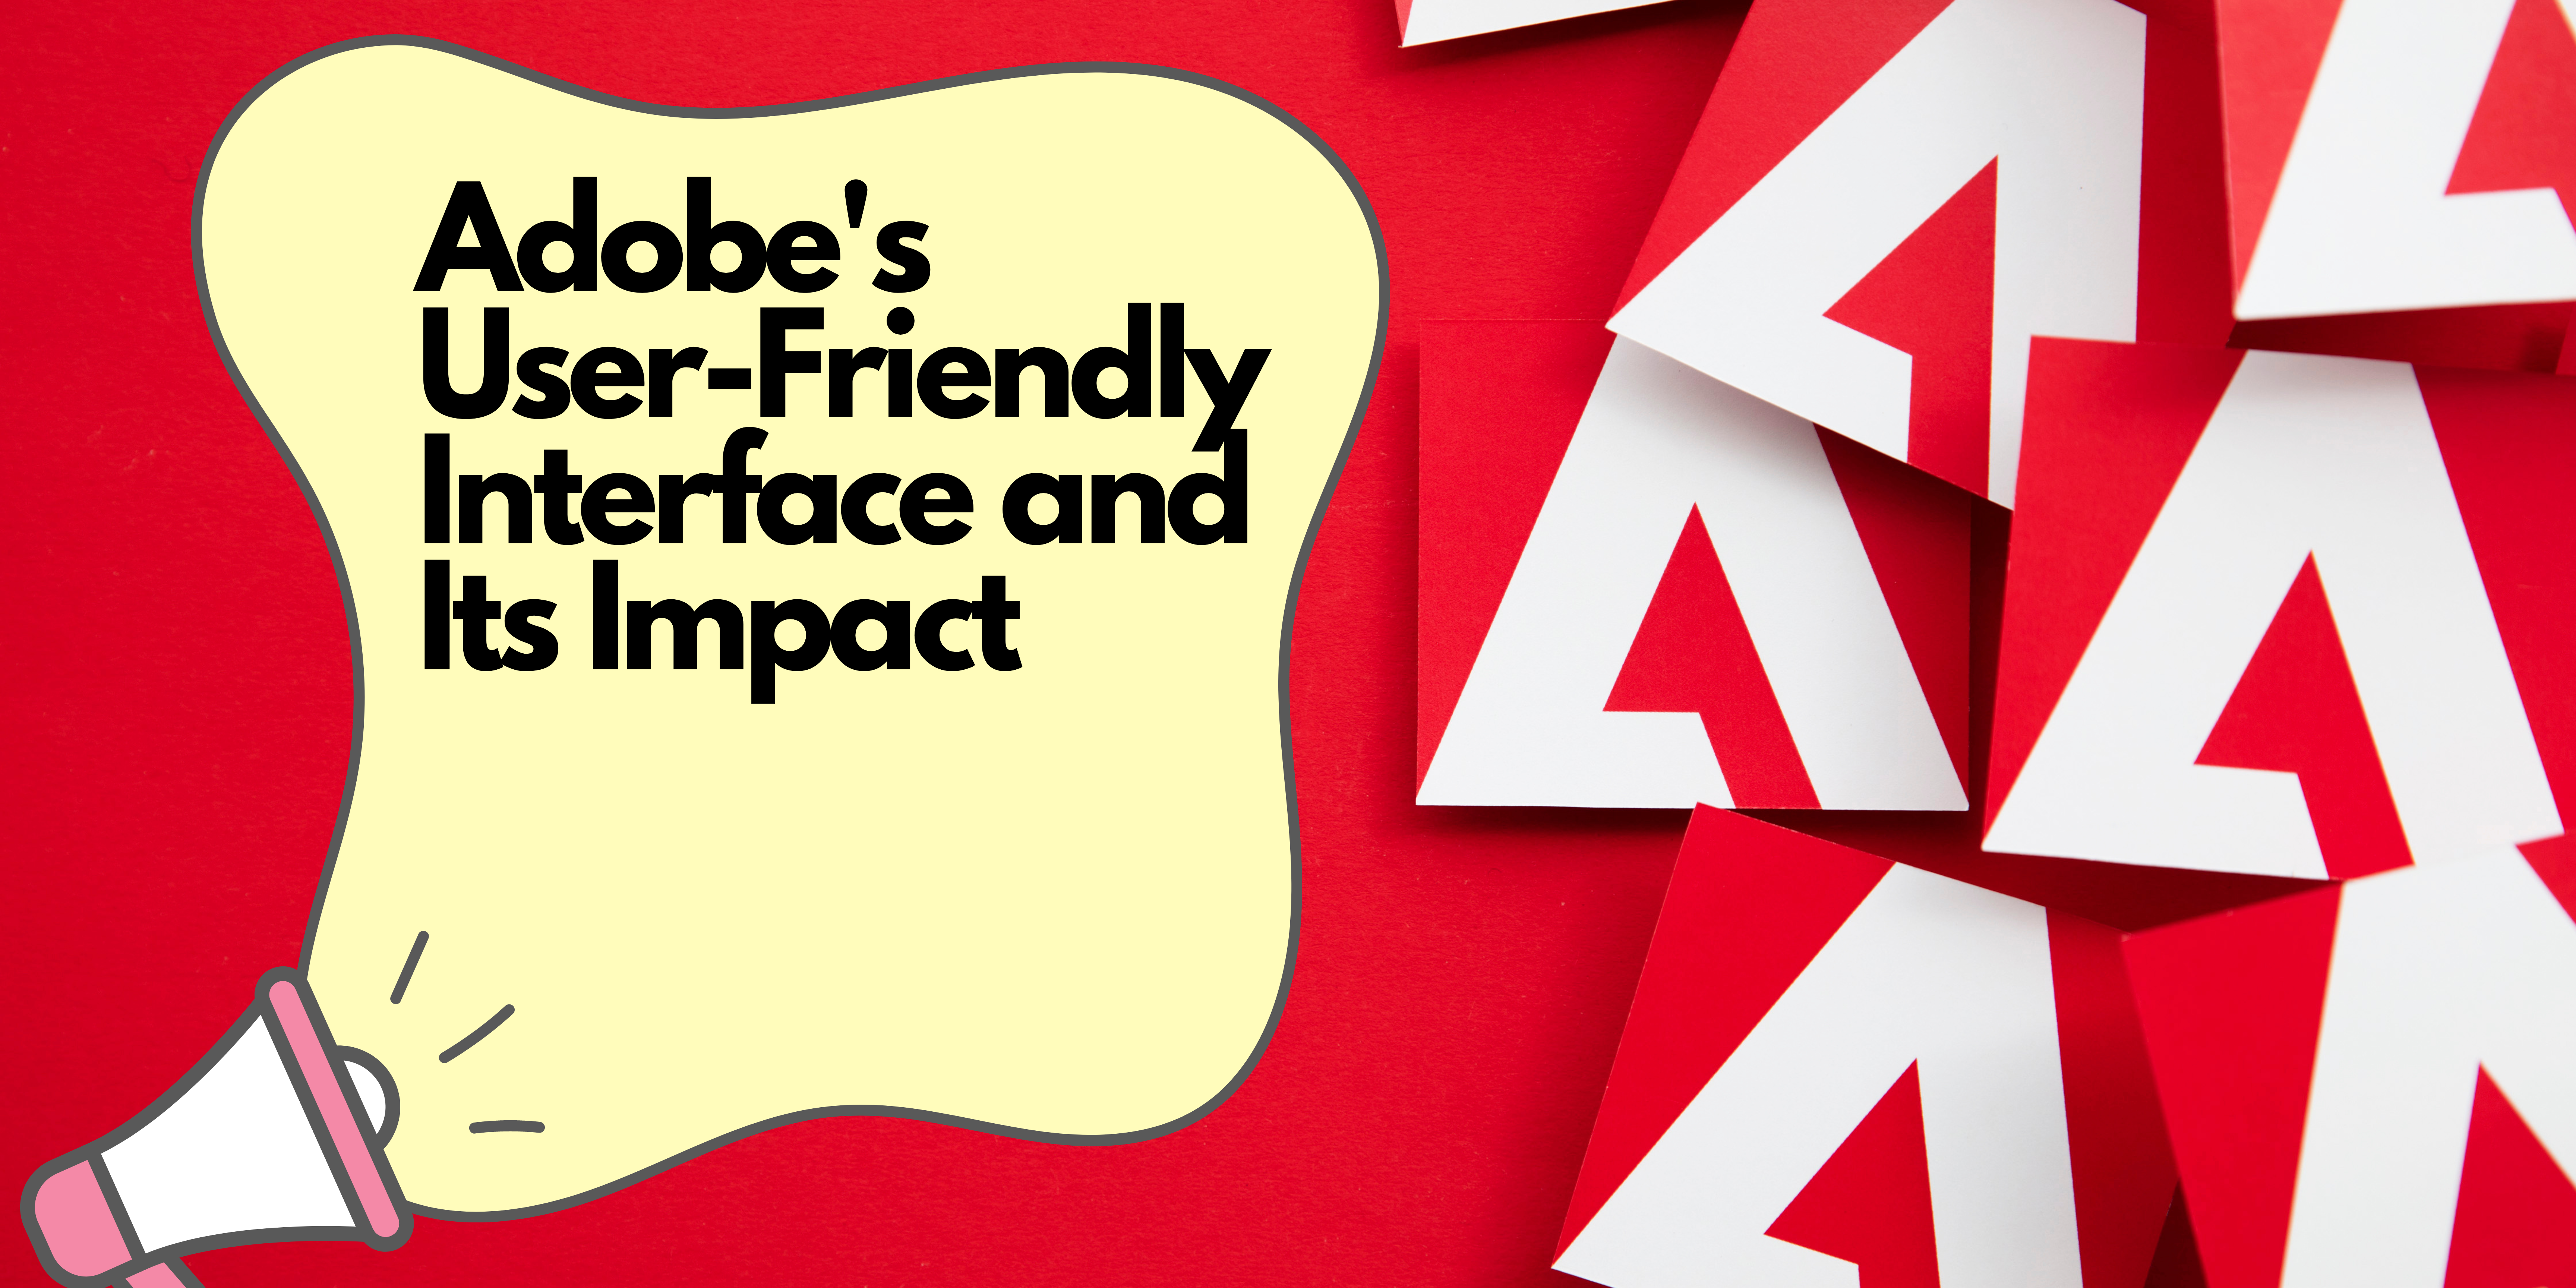 Adobe의 사용자 친화적인 인터페이스가 제너레이티브 AI에 미치는 혁신적인 영향 살펴보기 원활한 협업과 획기적인 결과물로 창의력을 발휘하세요.